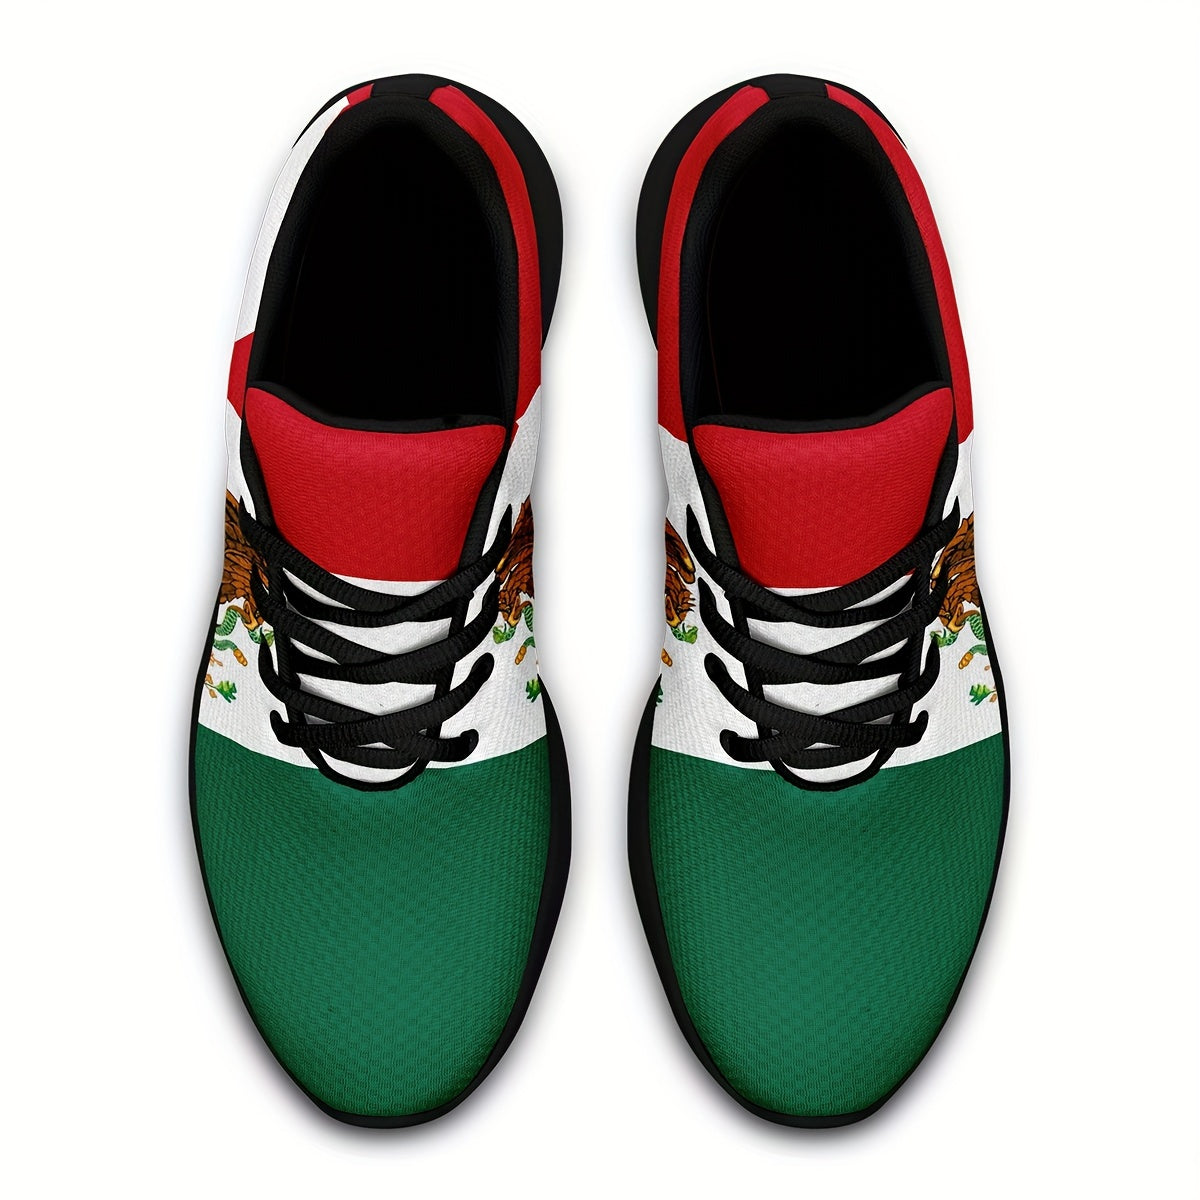 Plus Size Men's Mexico Flag Pattern Sneakers, Soft Sole